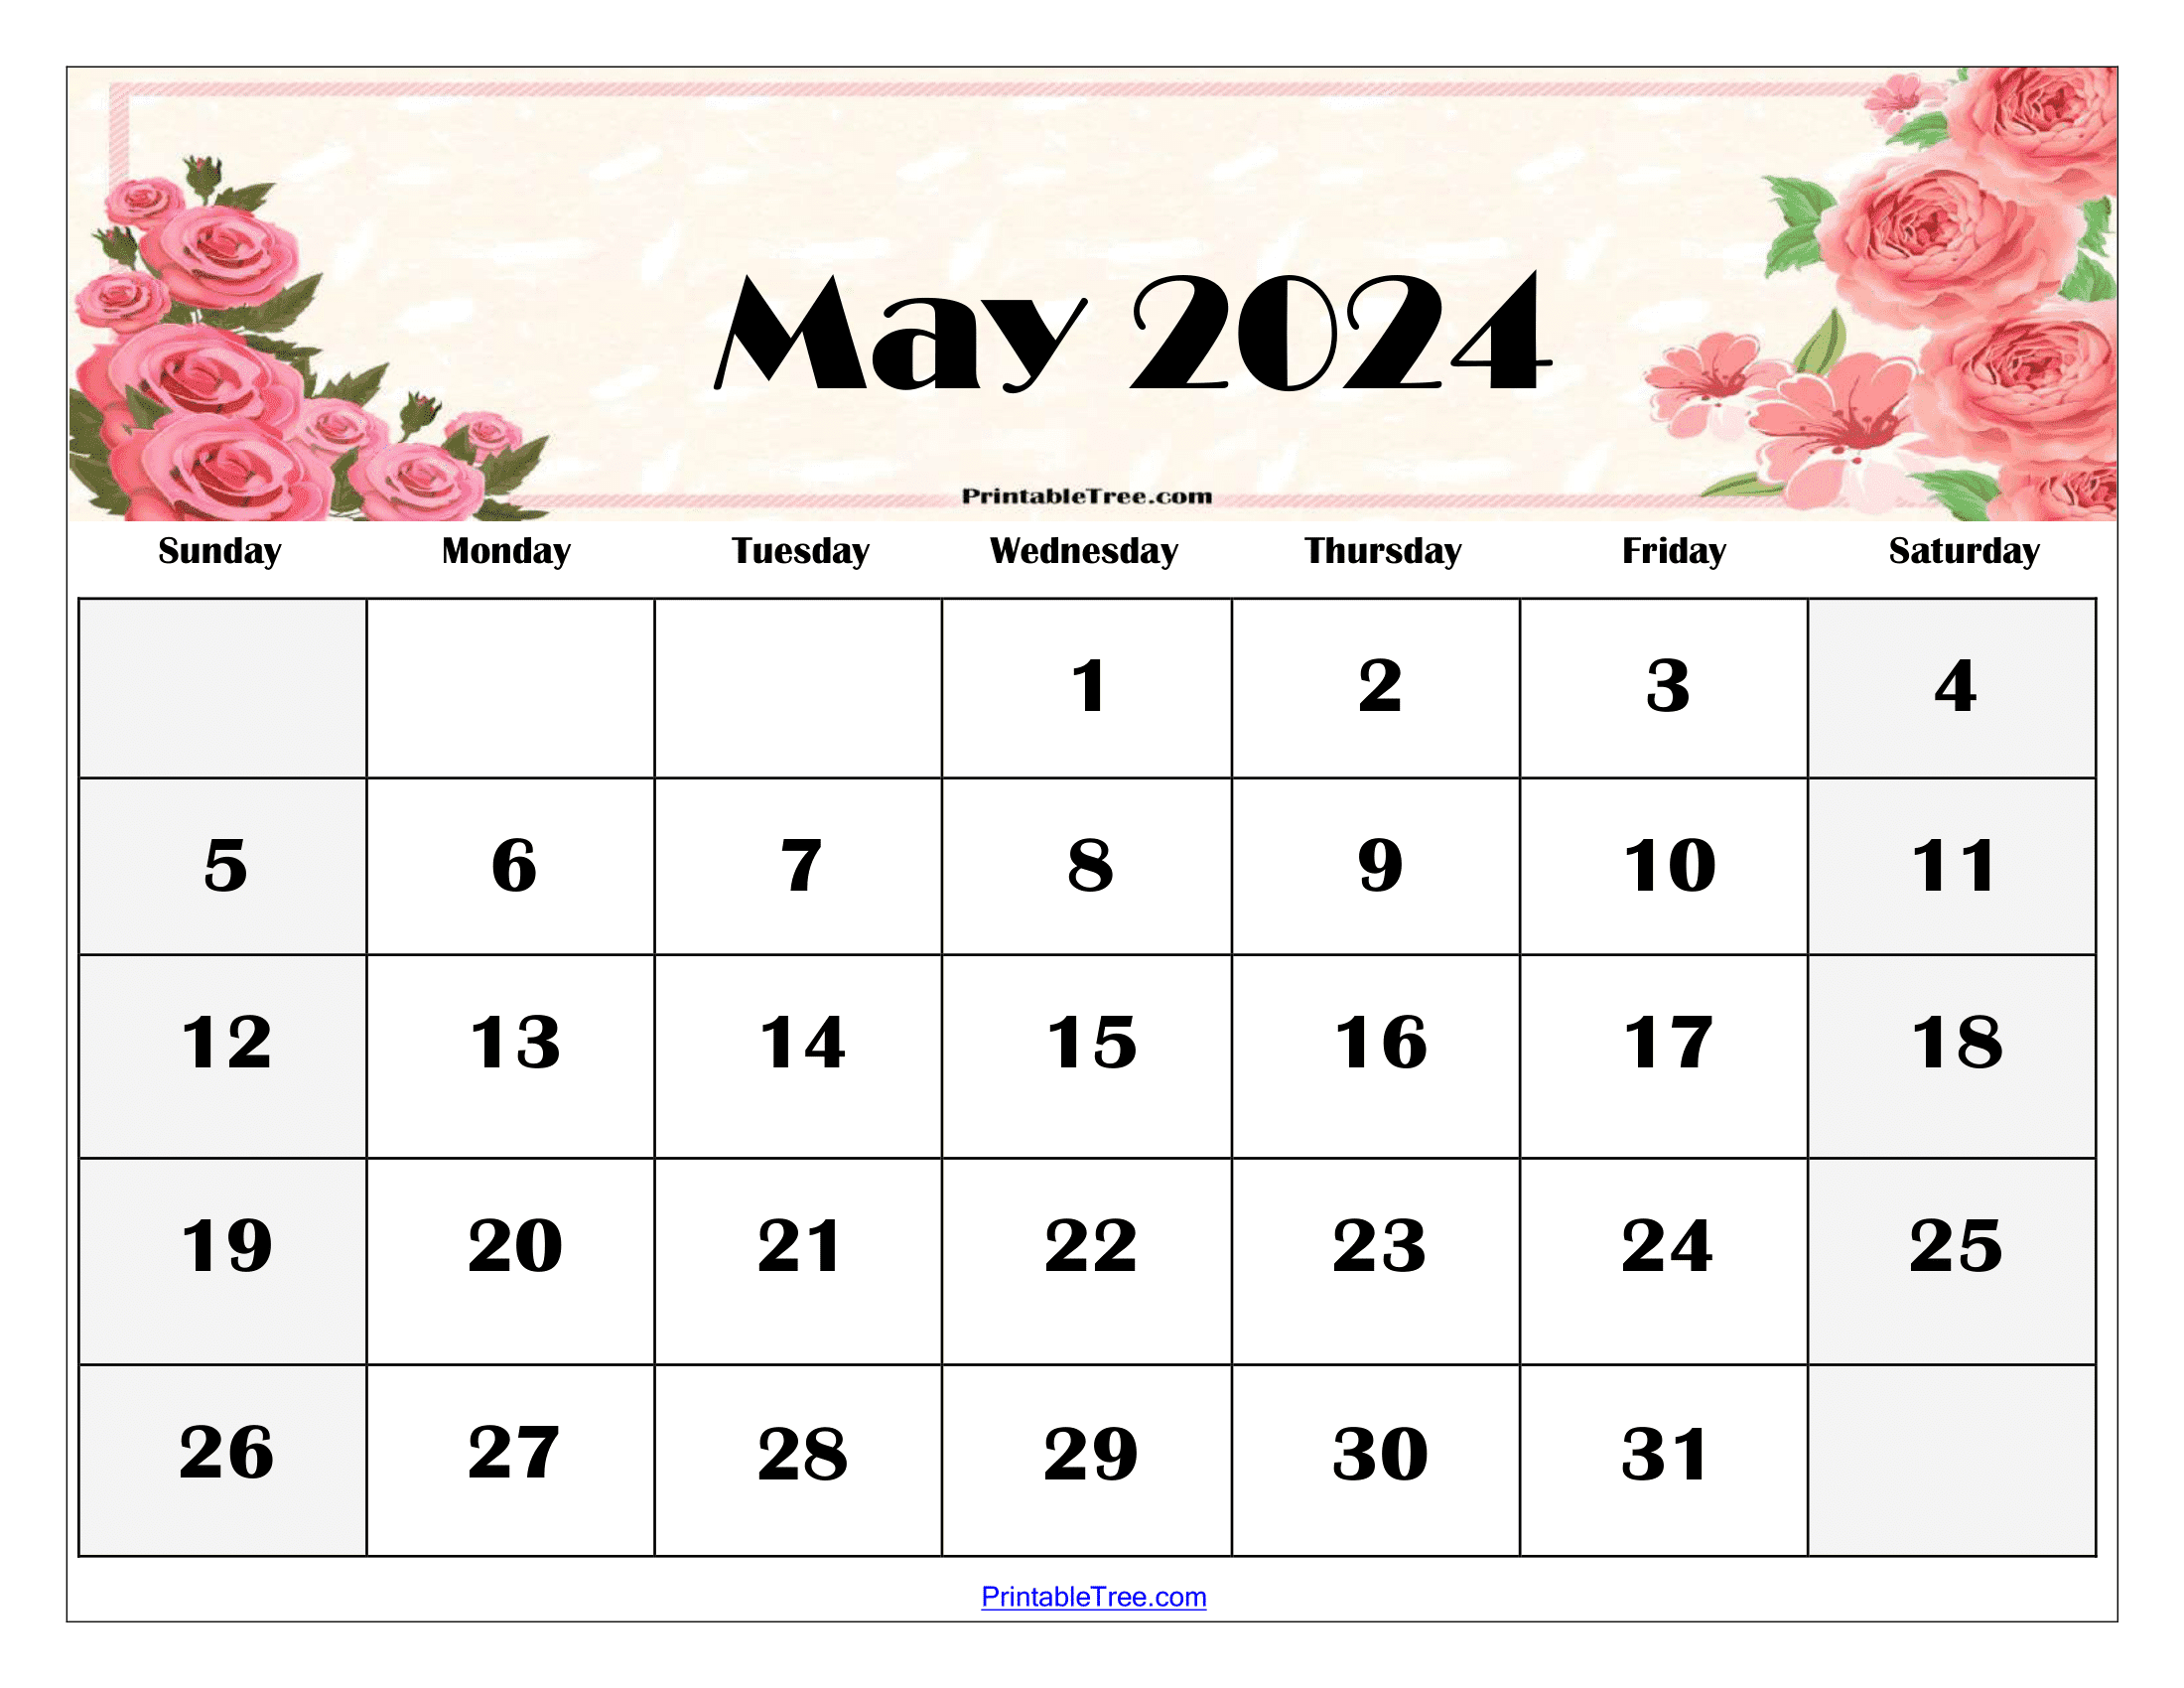 May 2024 Floral Calendar Printable